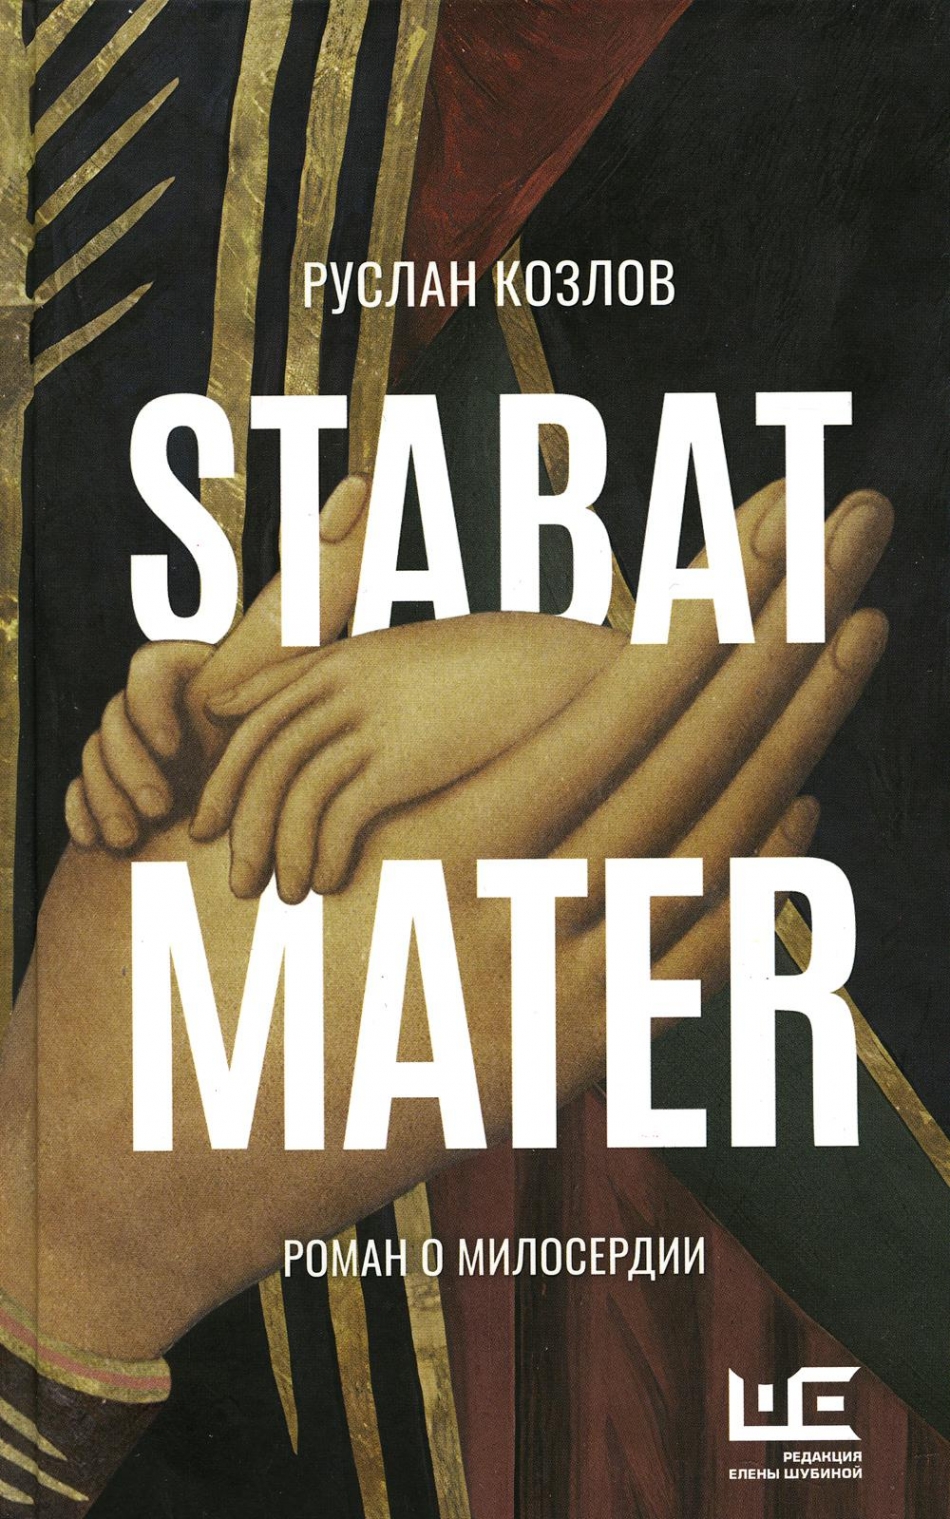  .. Stabat Mater:  